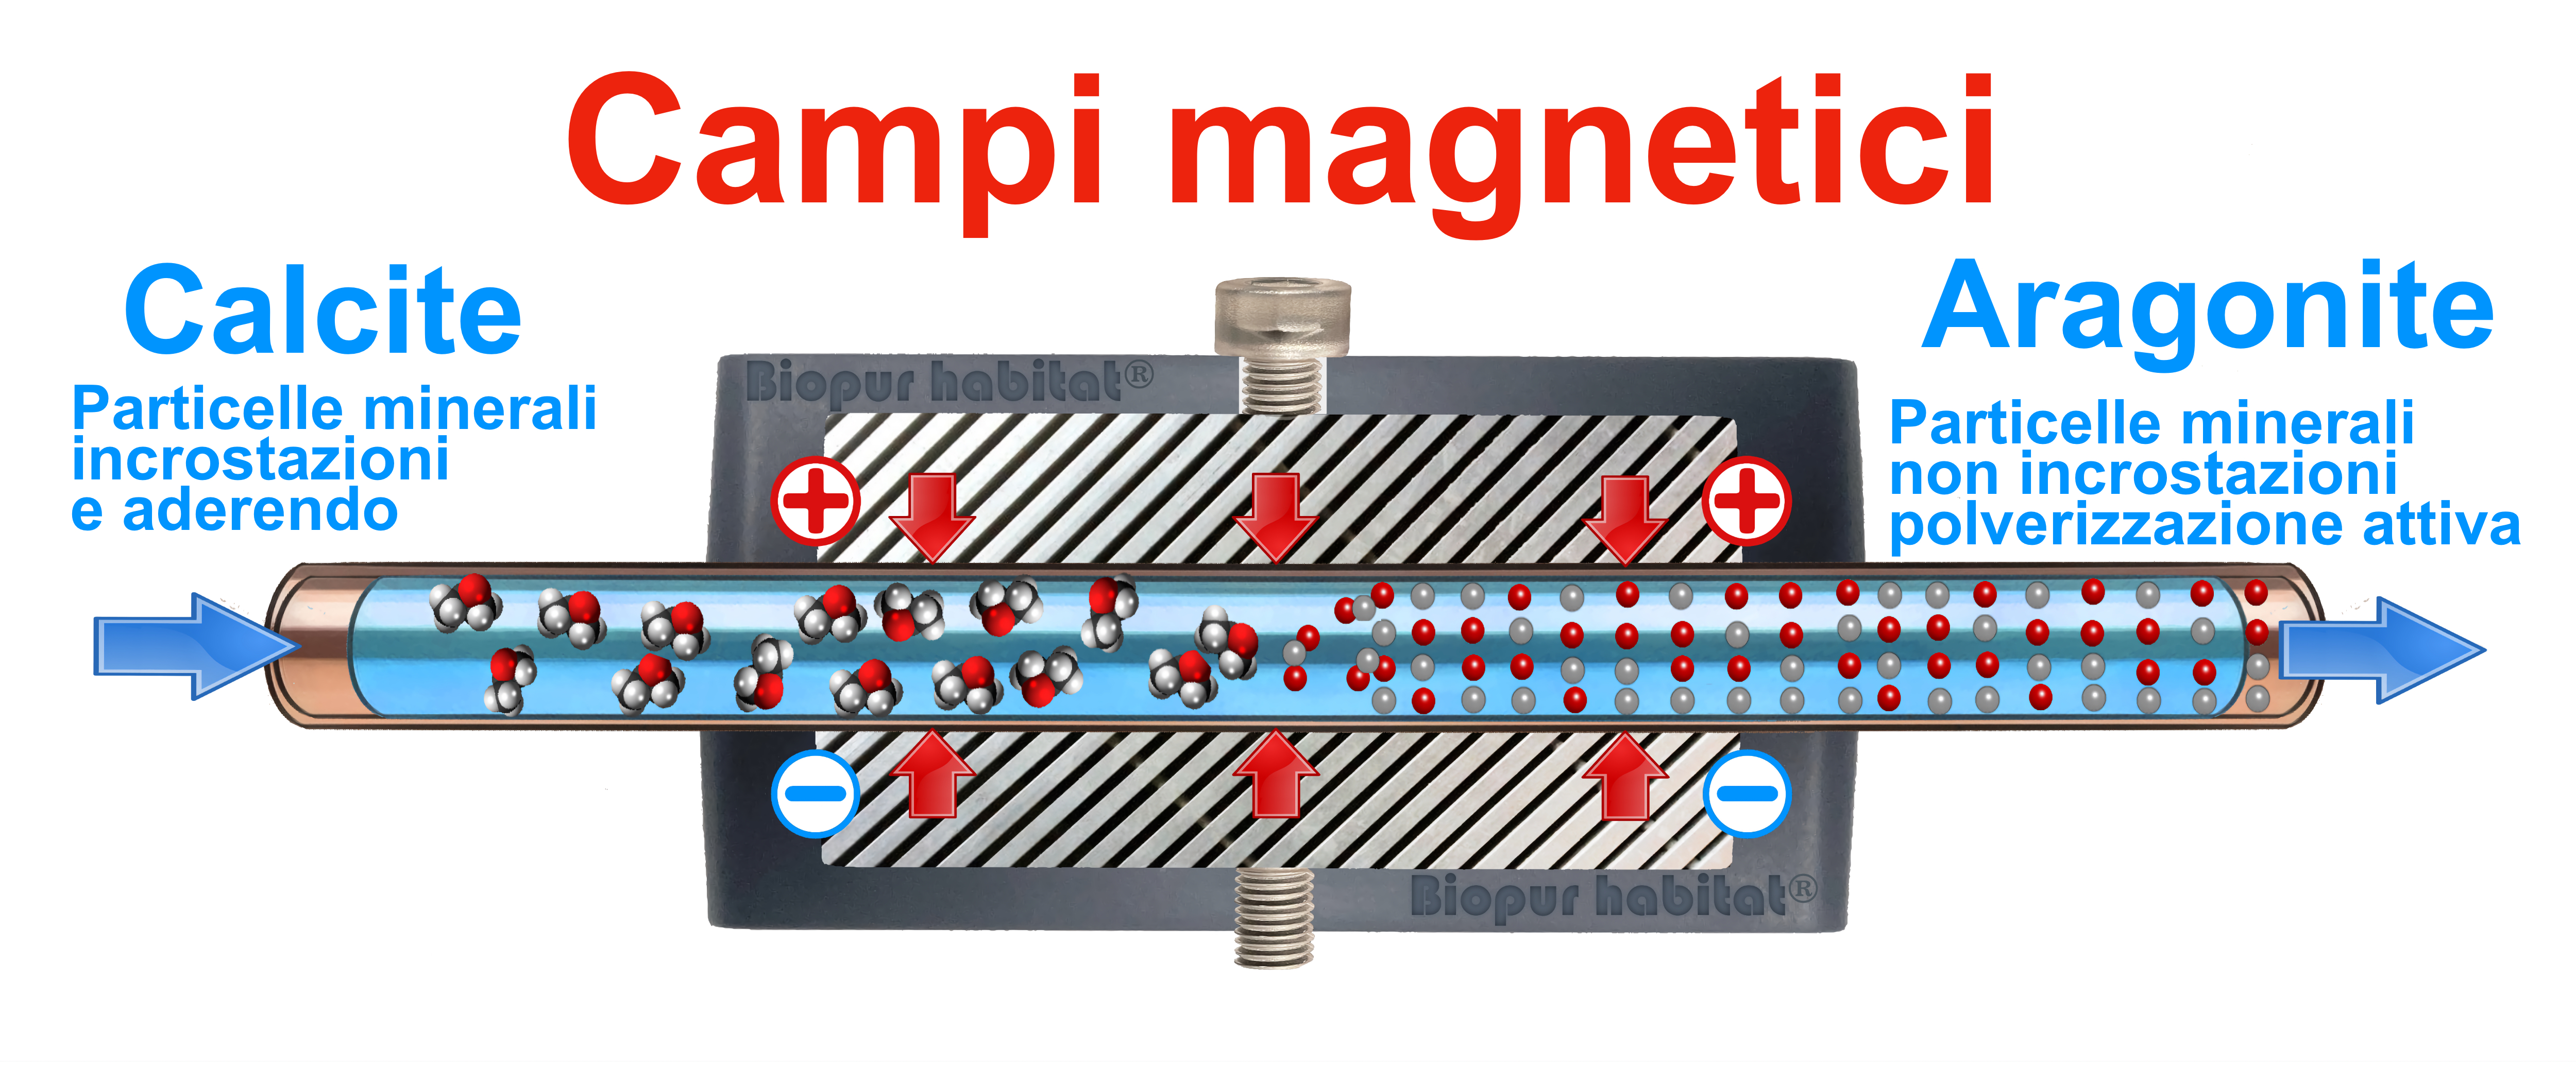 Magnete anticalcare magnetico powermag MI Power 10800 gauss